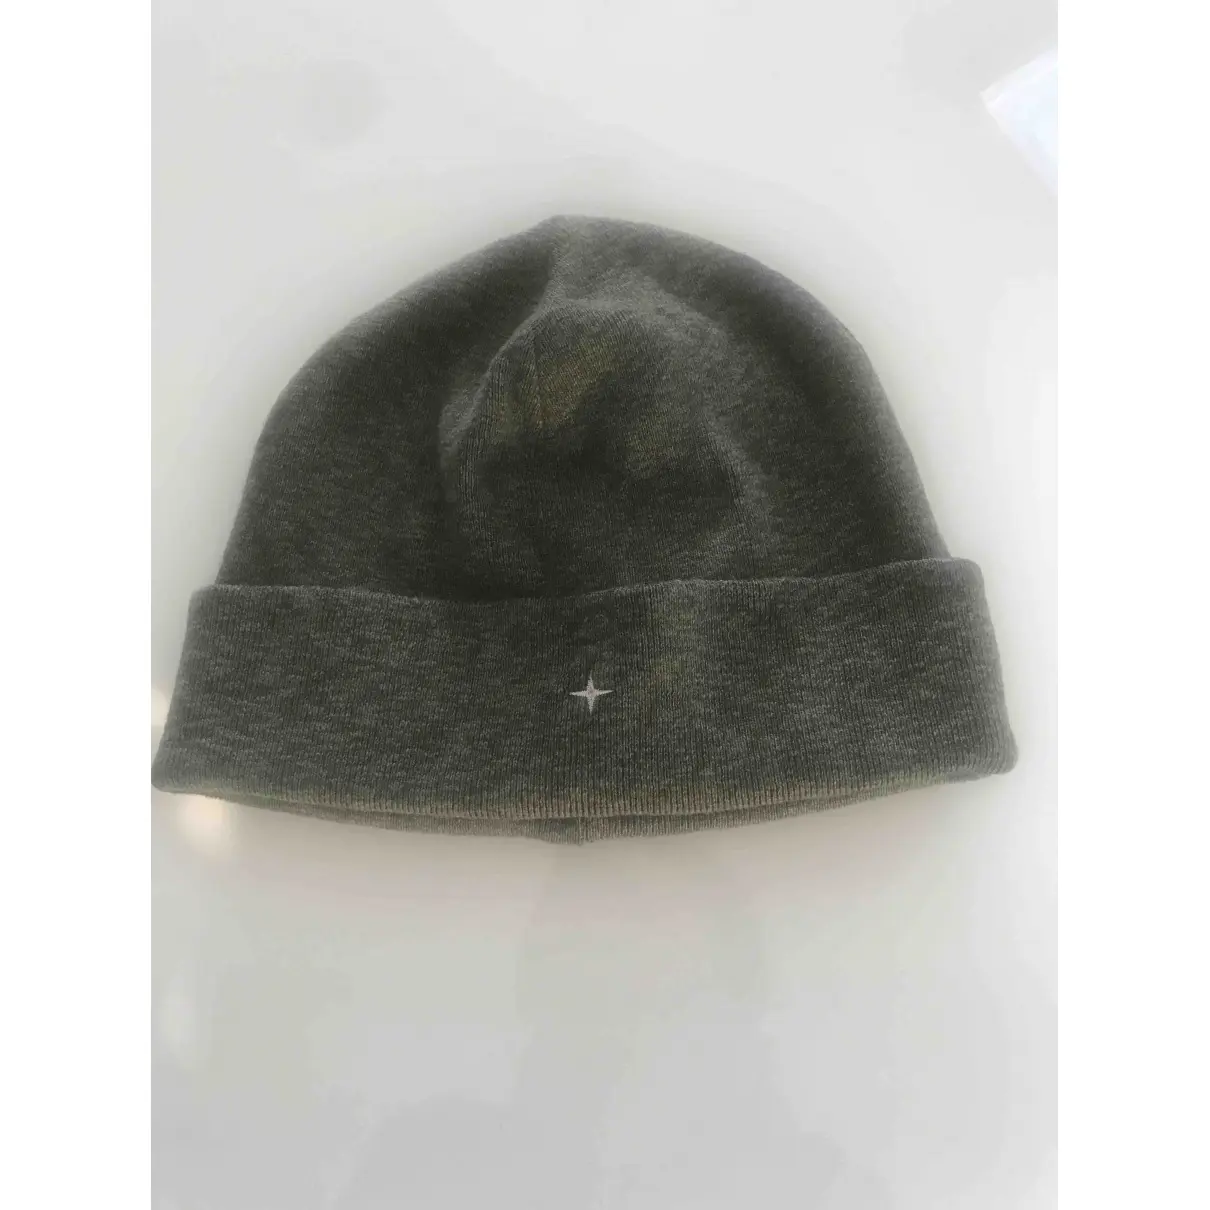 Buy Stone Island Wool hat online